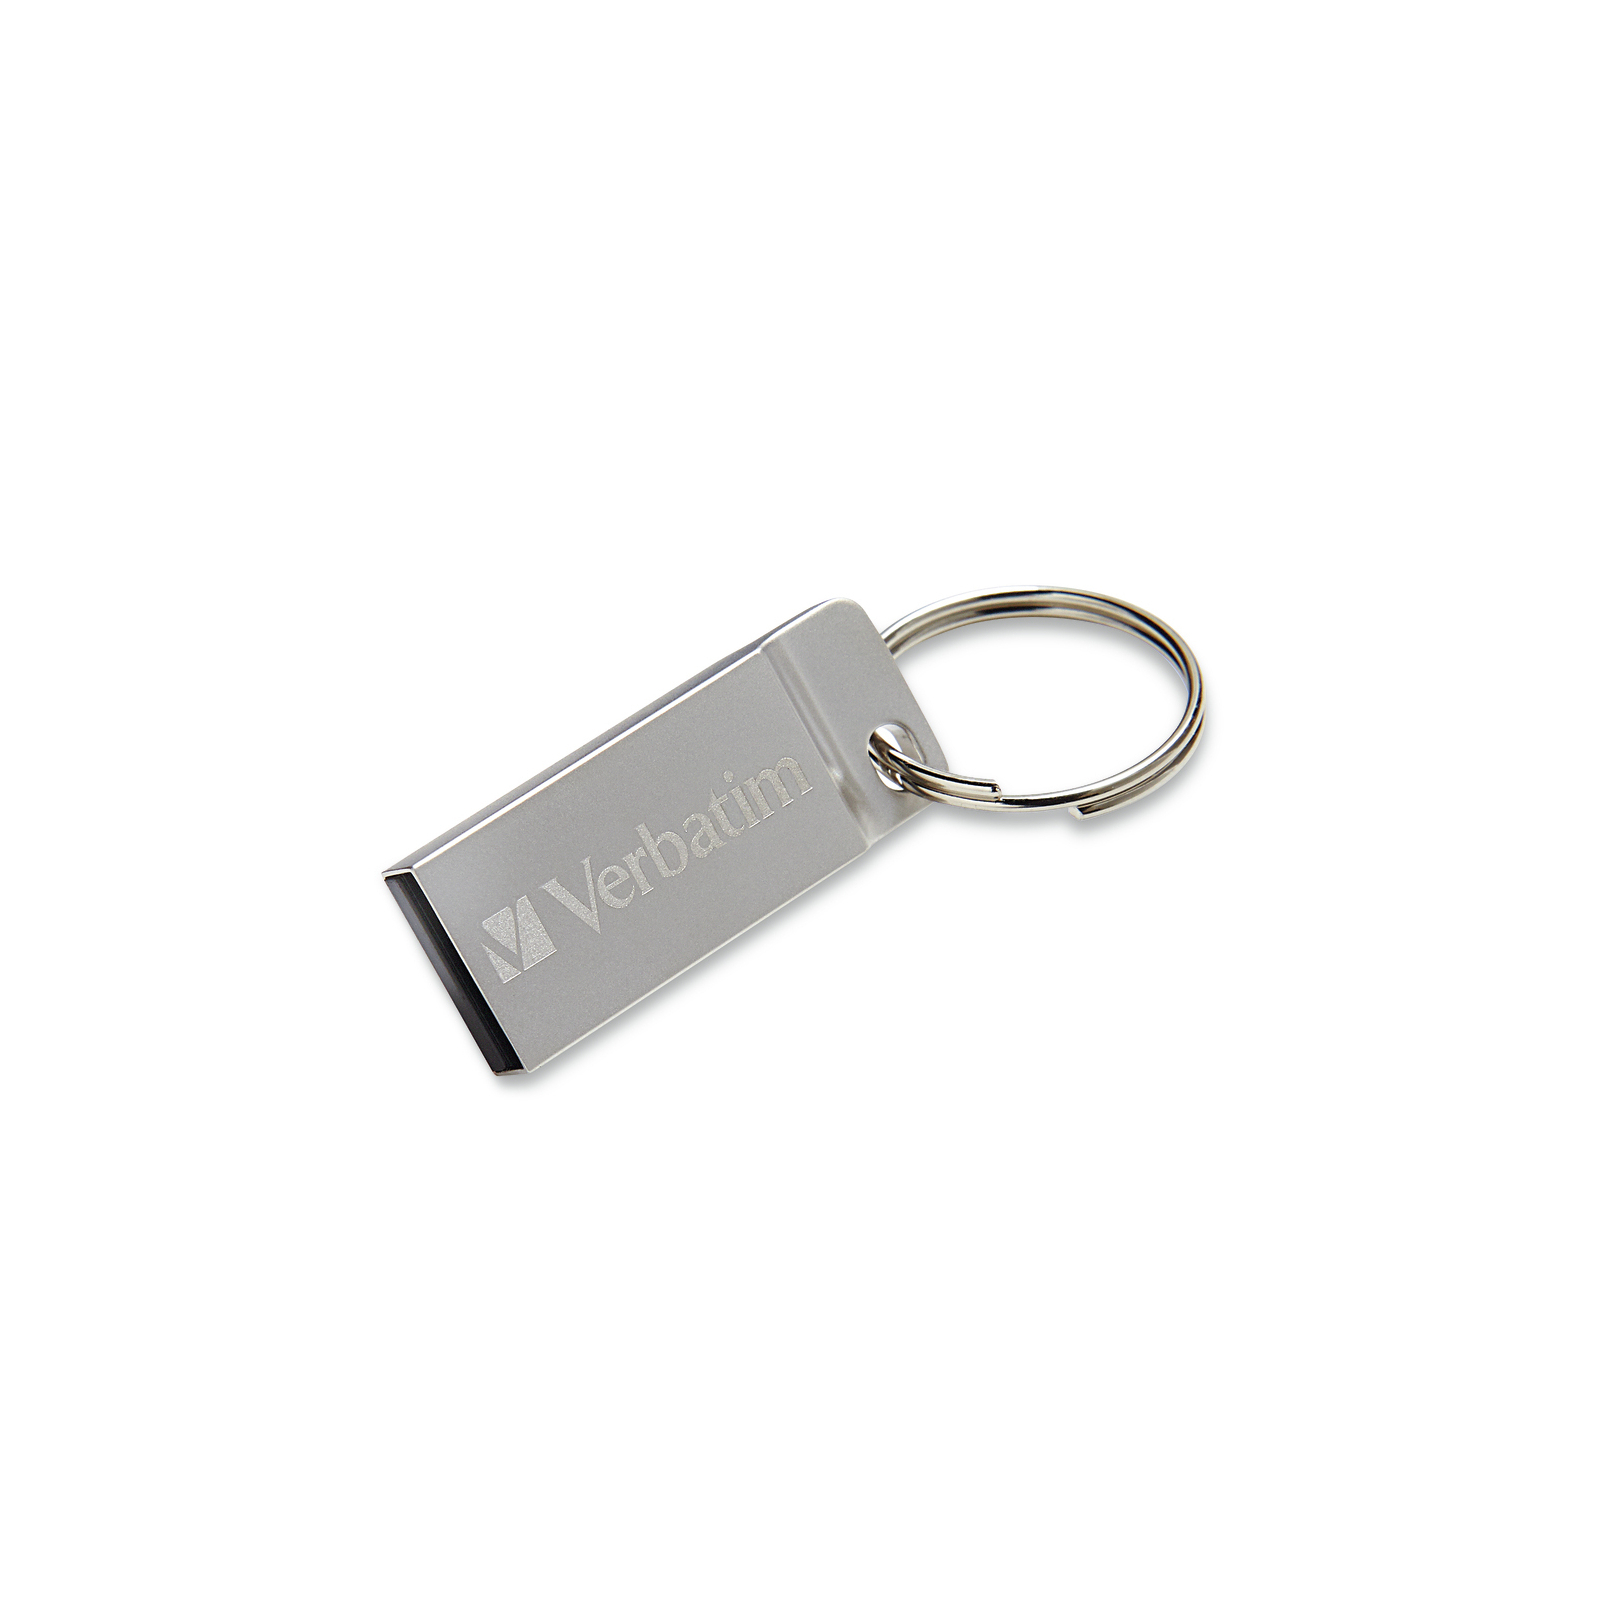 USB флеш накопитель Verbatim 16GB Metal Executive Silver USB 2.0 (98748) изображение 3